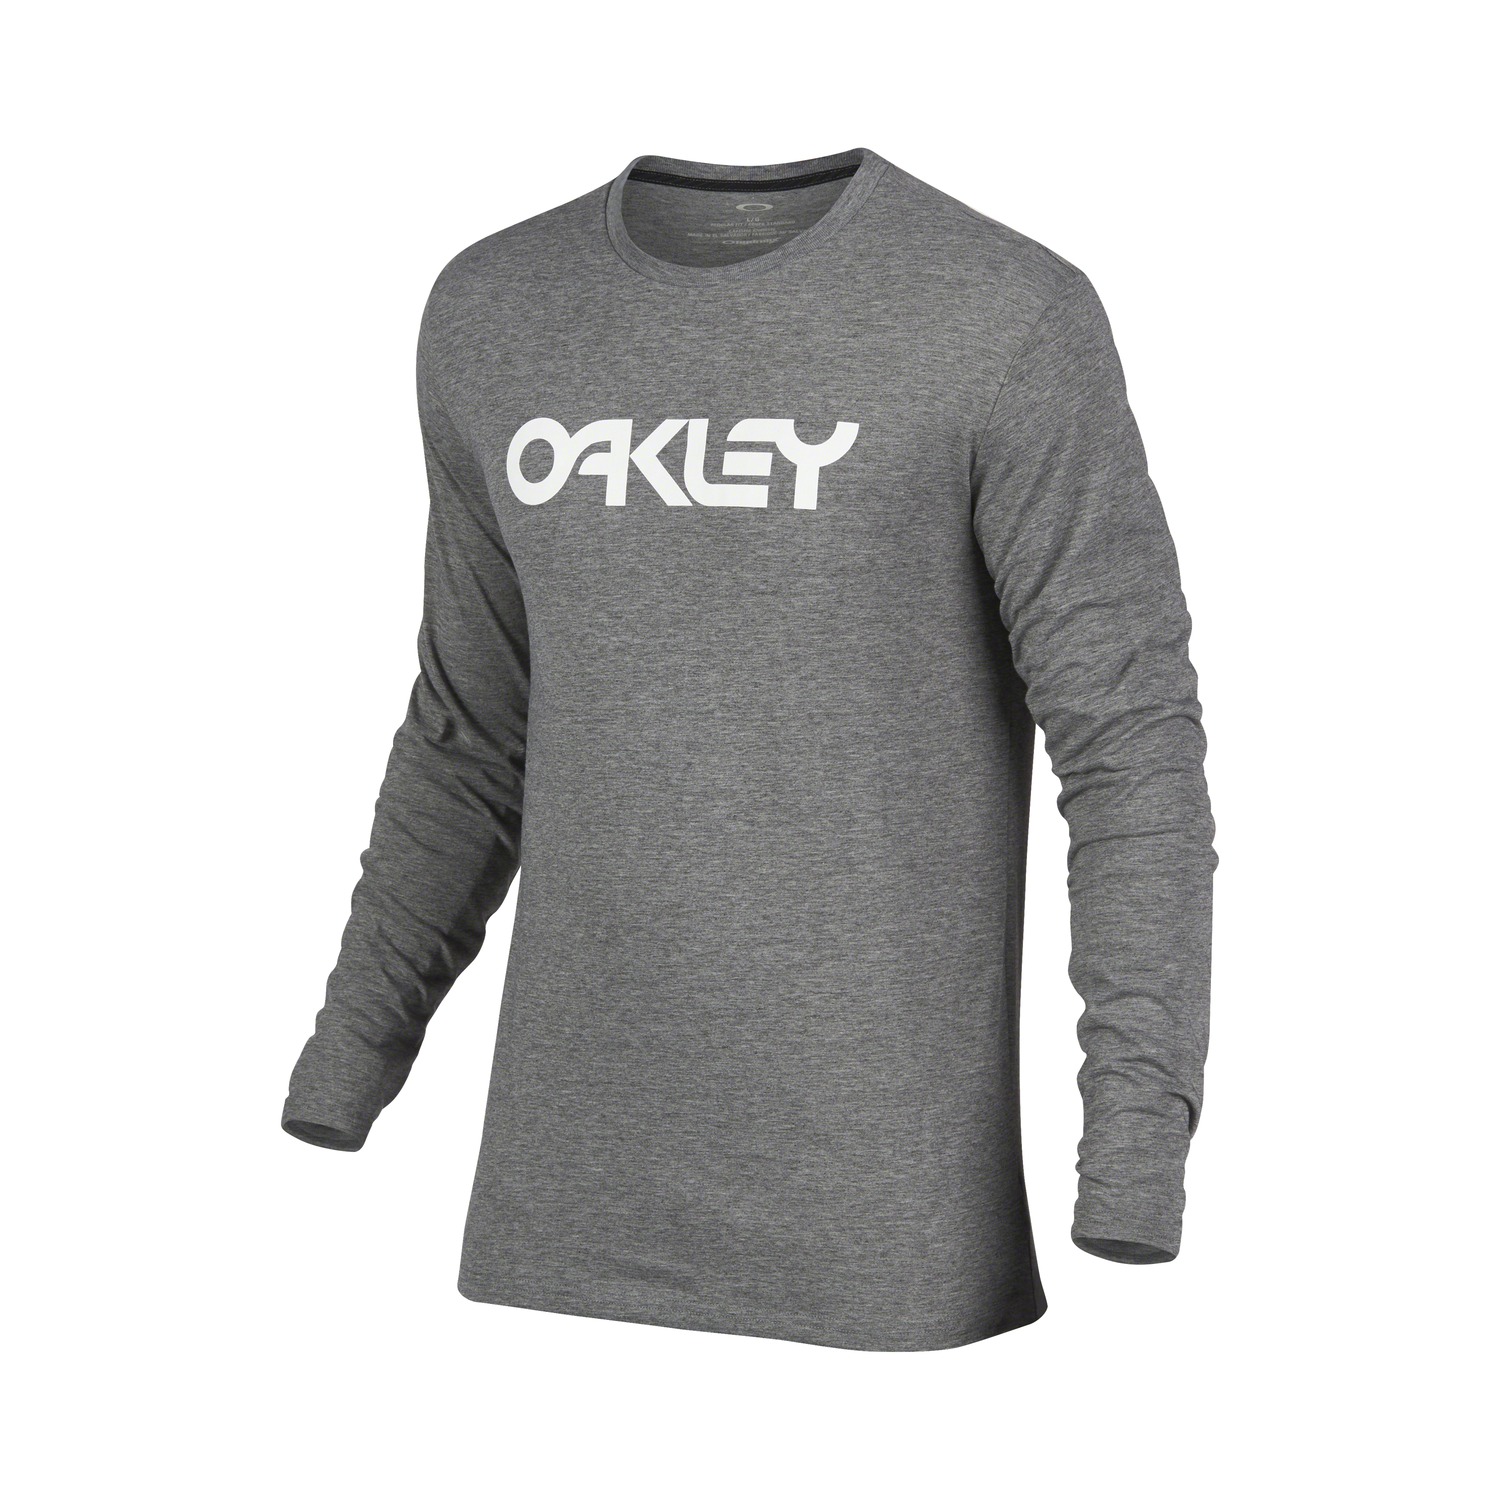 Oakley T Shirt Size Chart